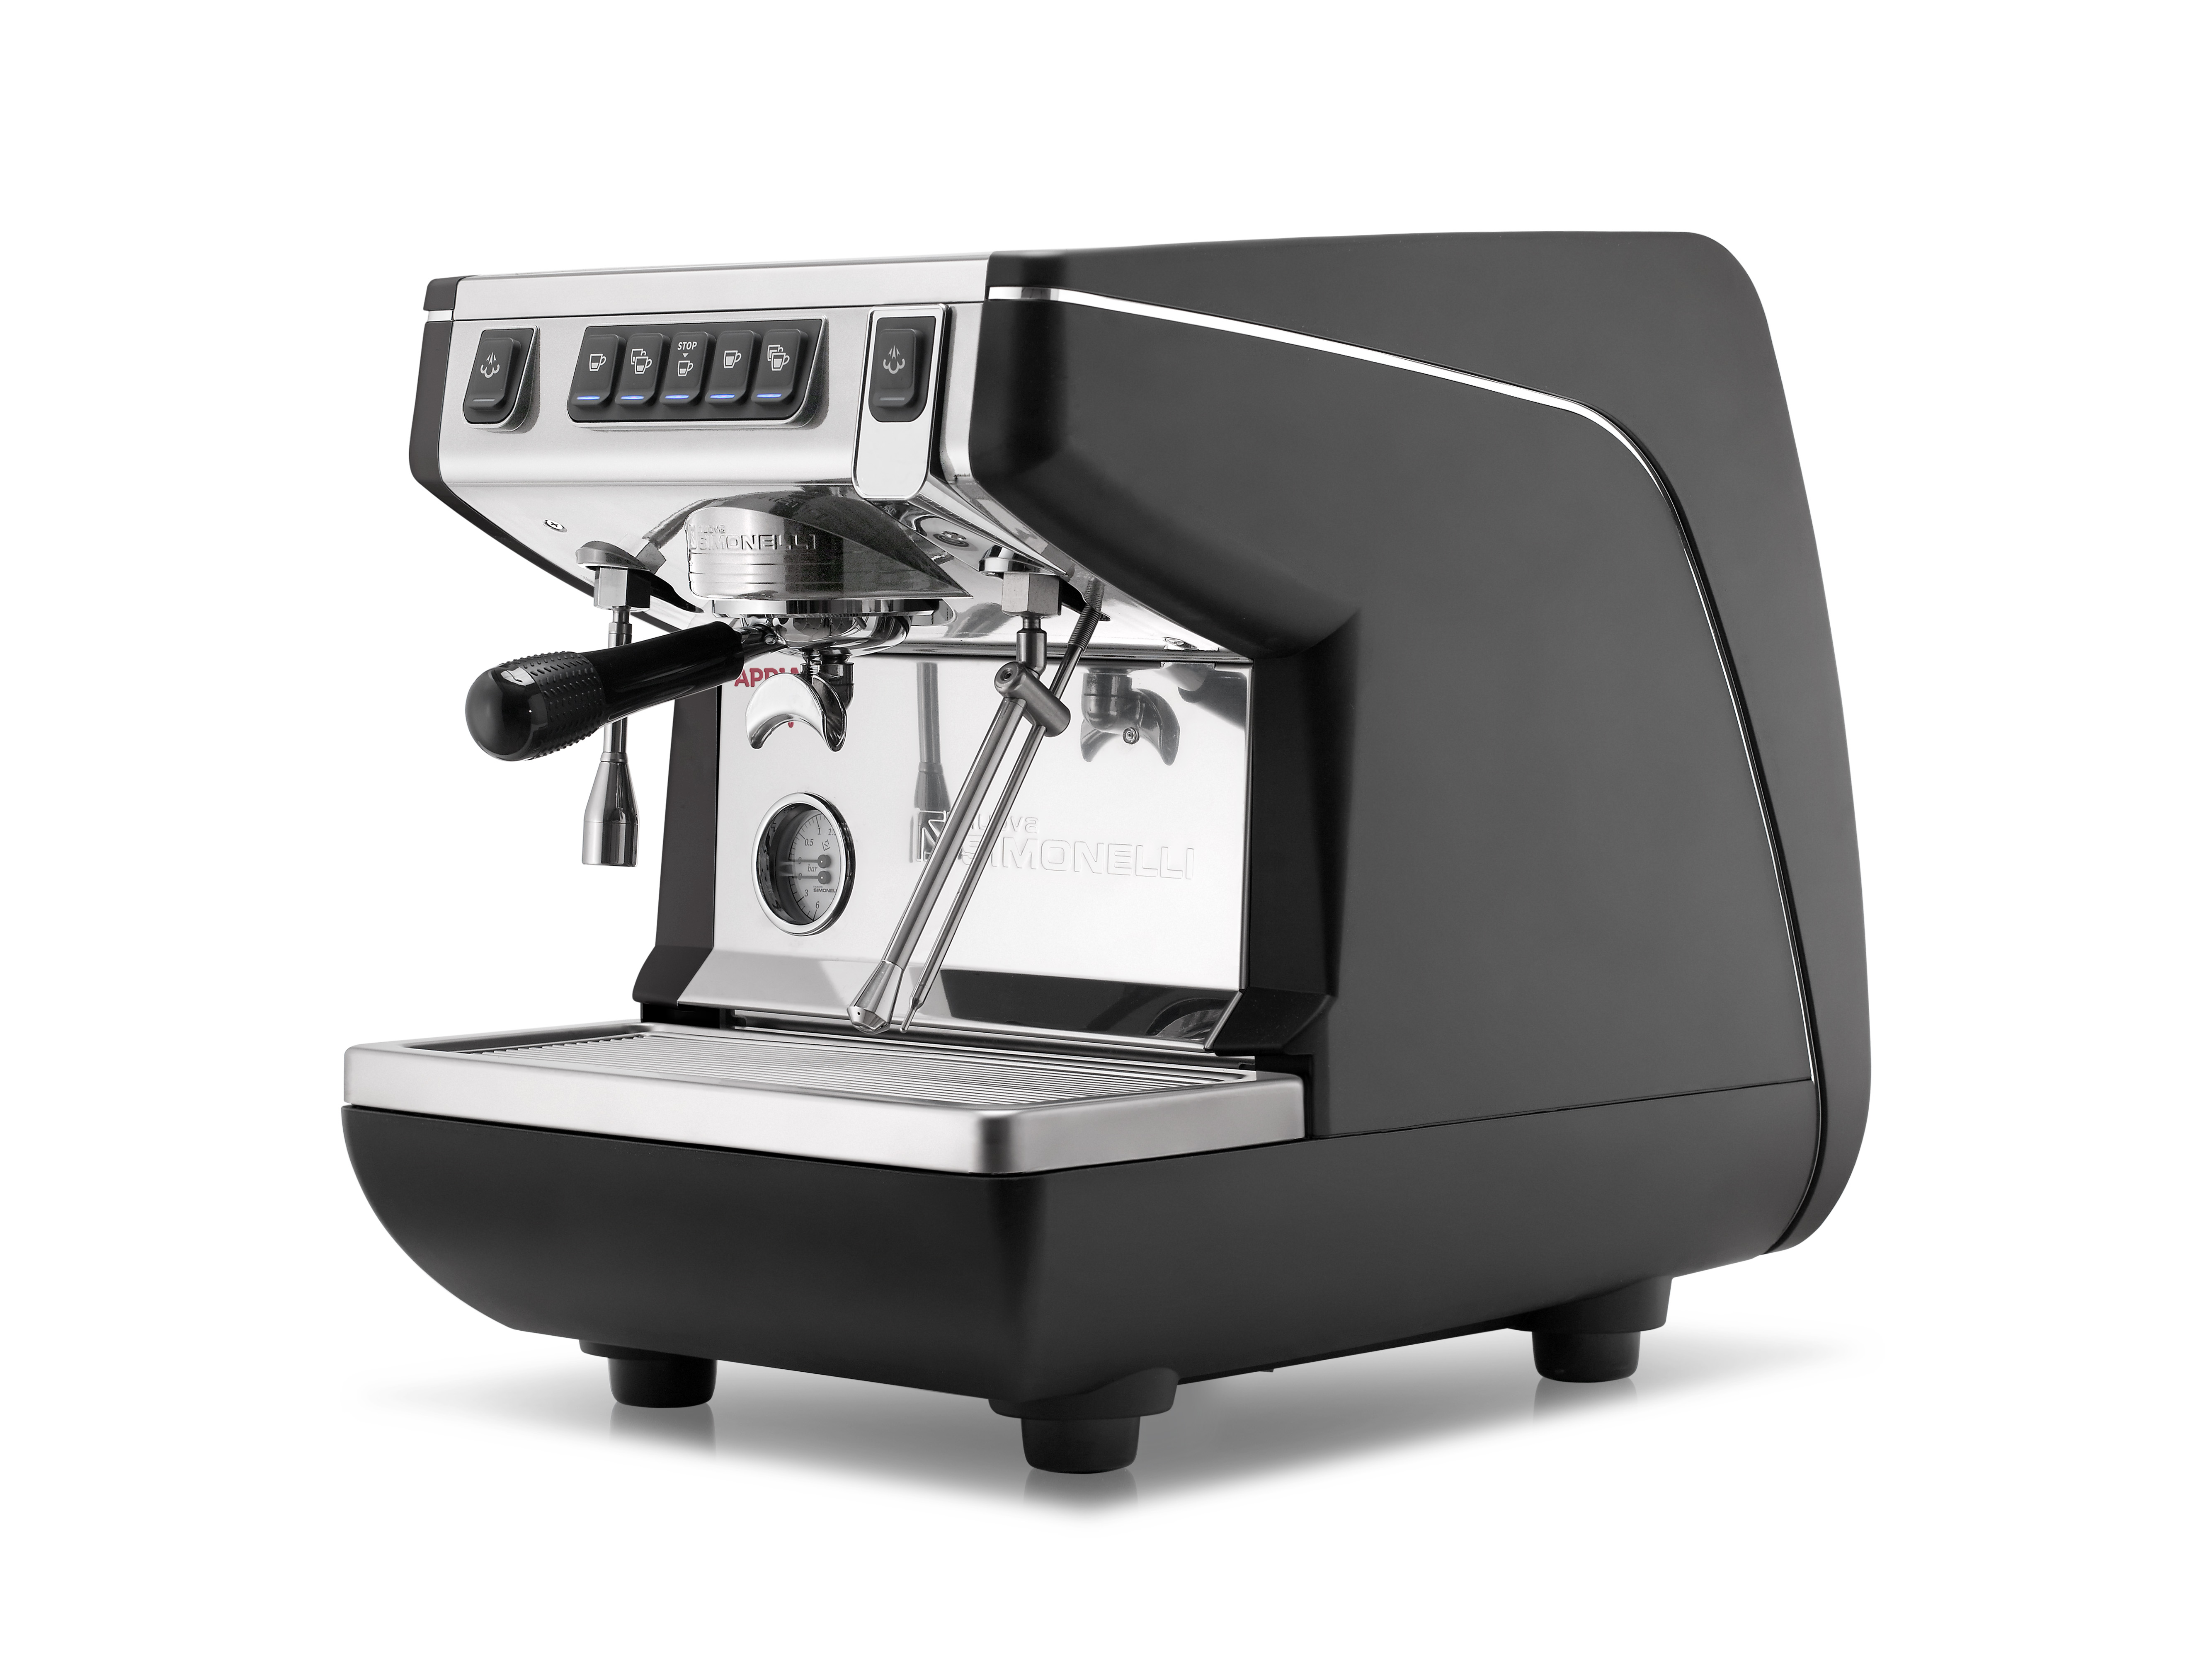 Appia-Life-1-group-commercial-espresso-machine